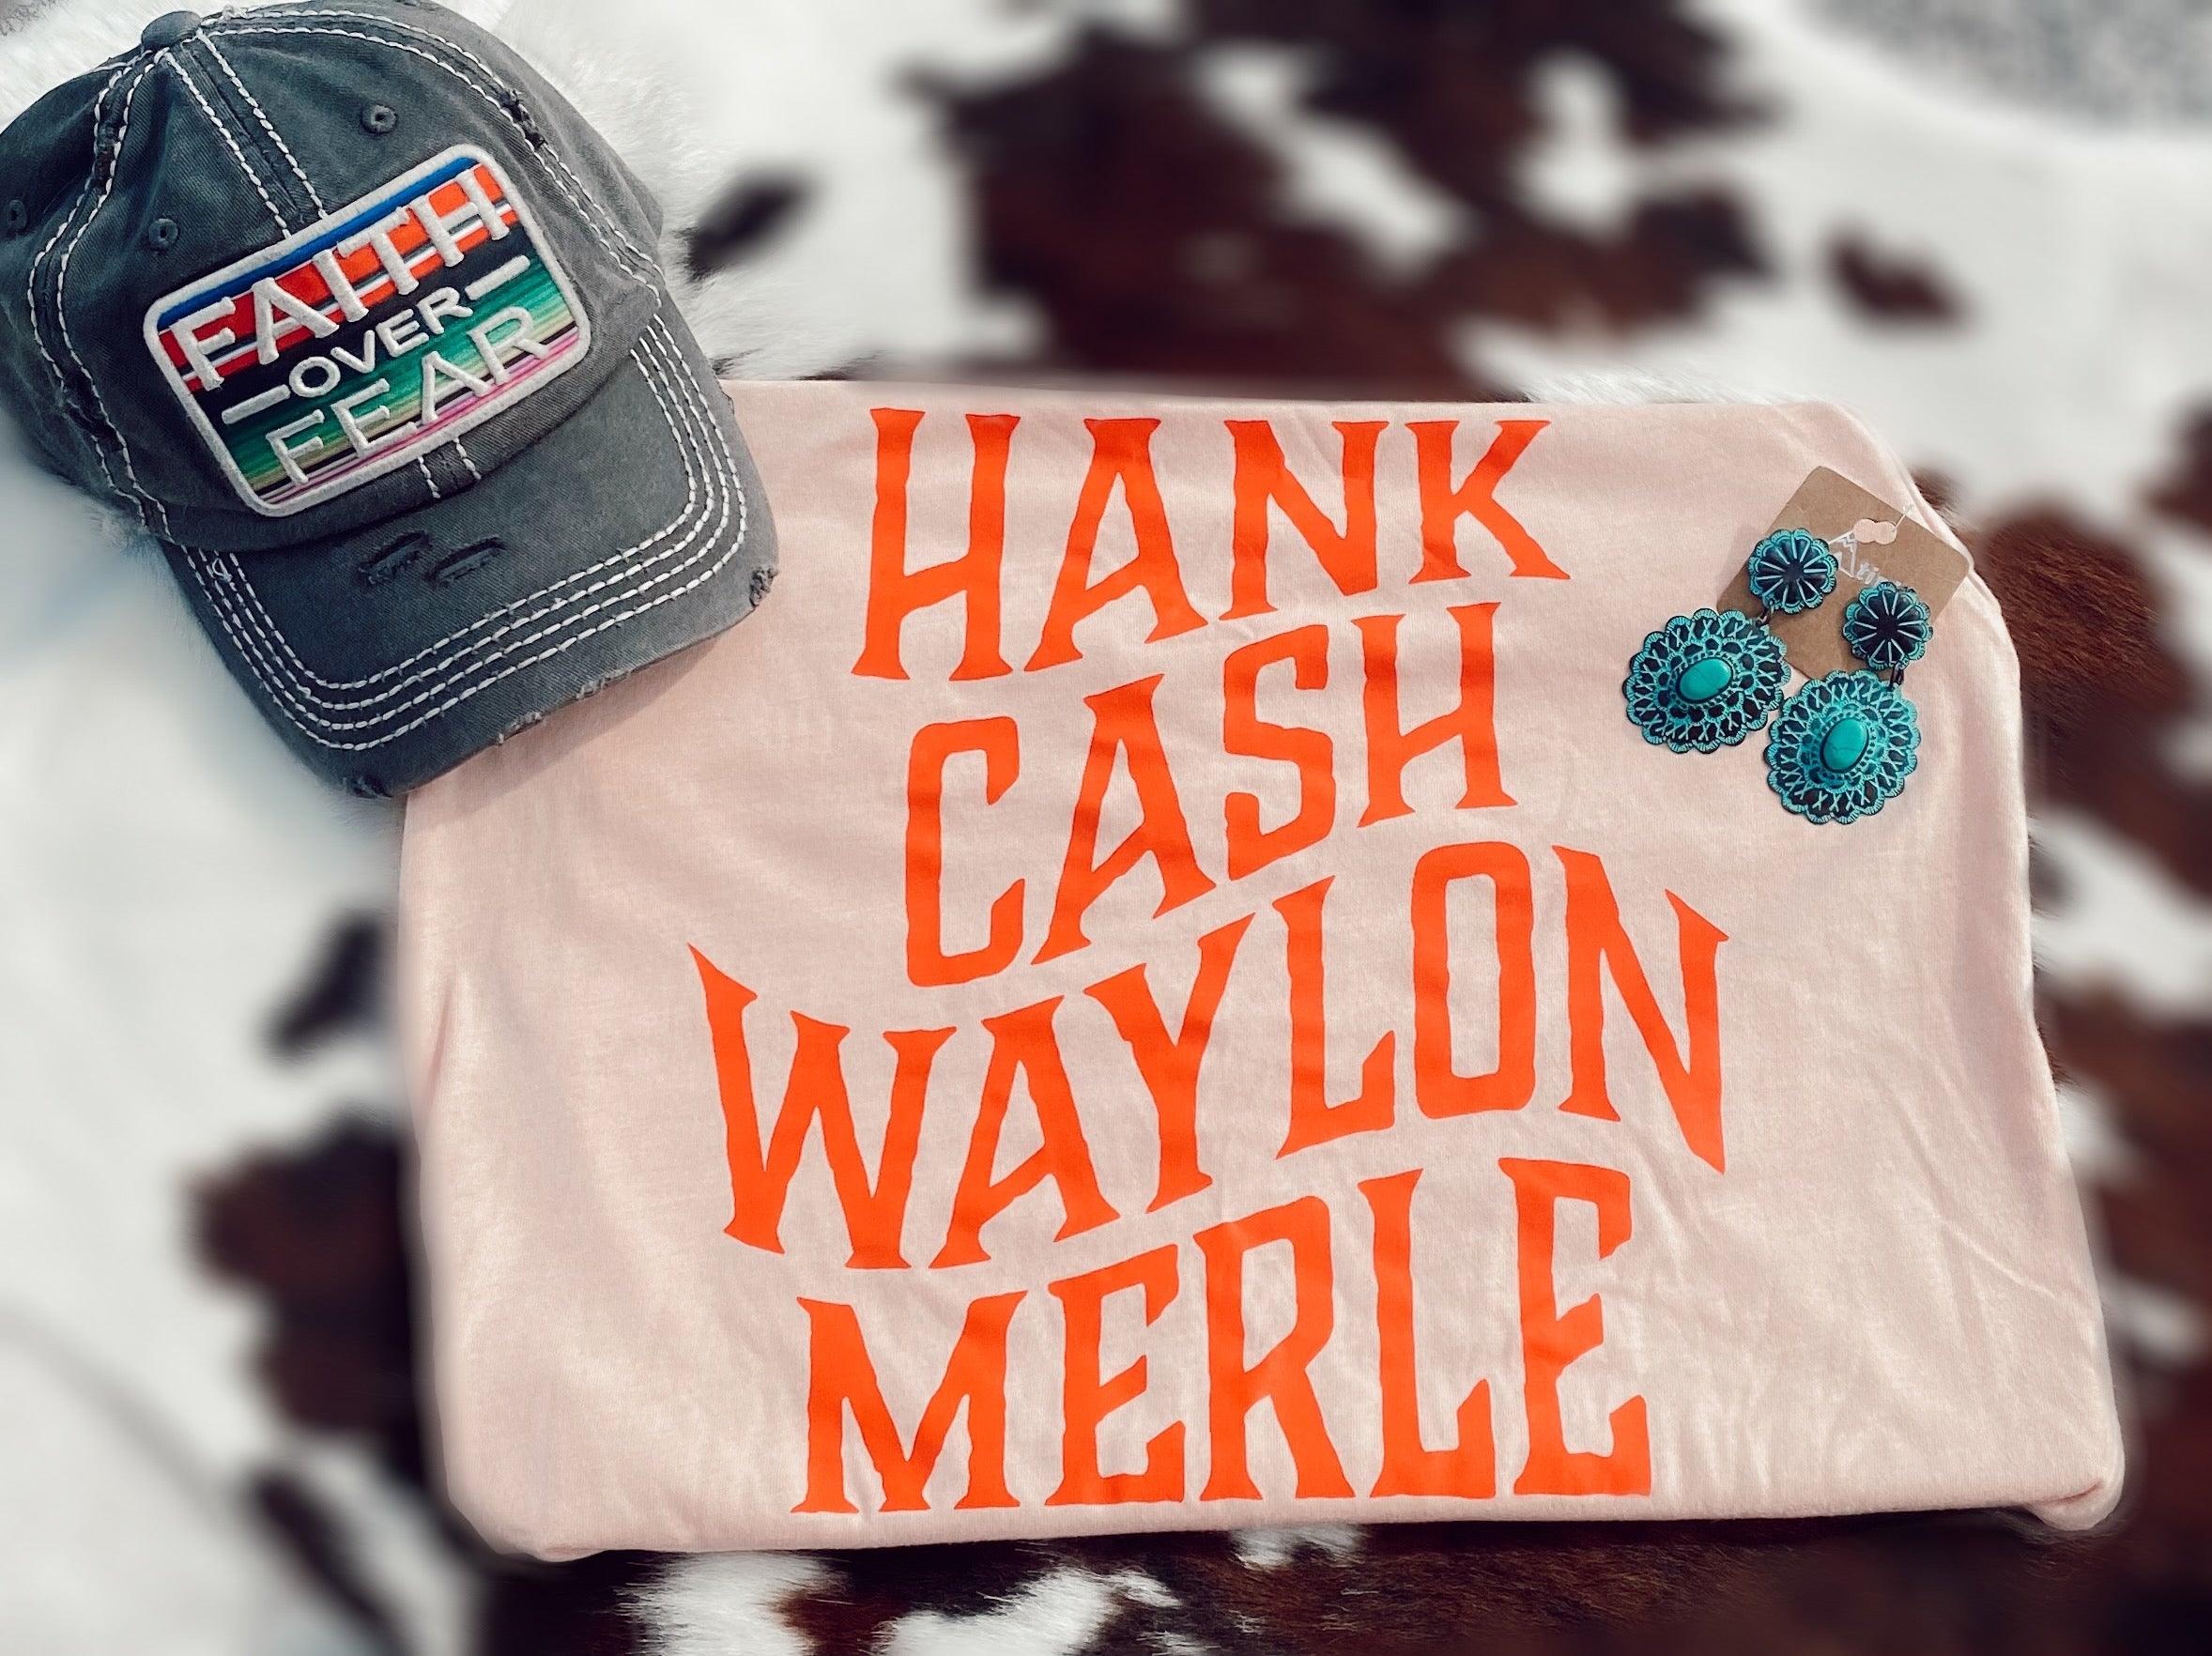 Hank, Cash, Waylon, Merle Graphic Tee Turquoise Traveler 